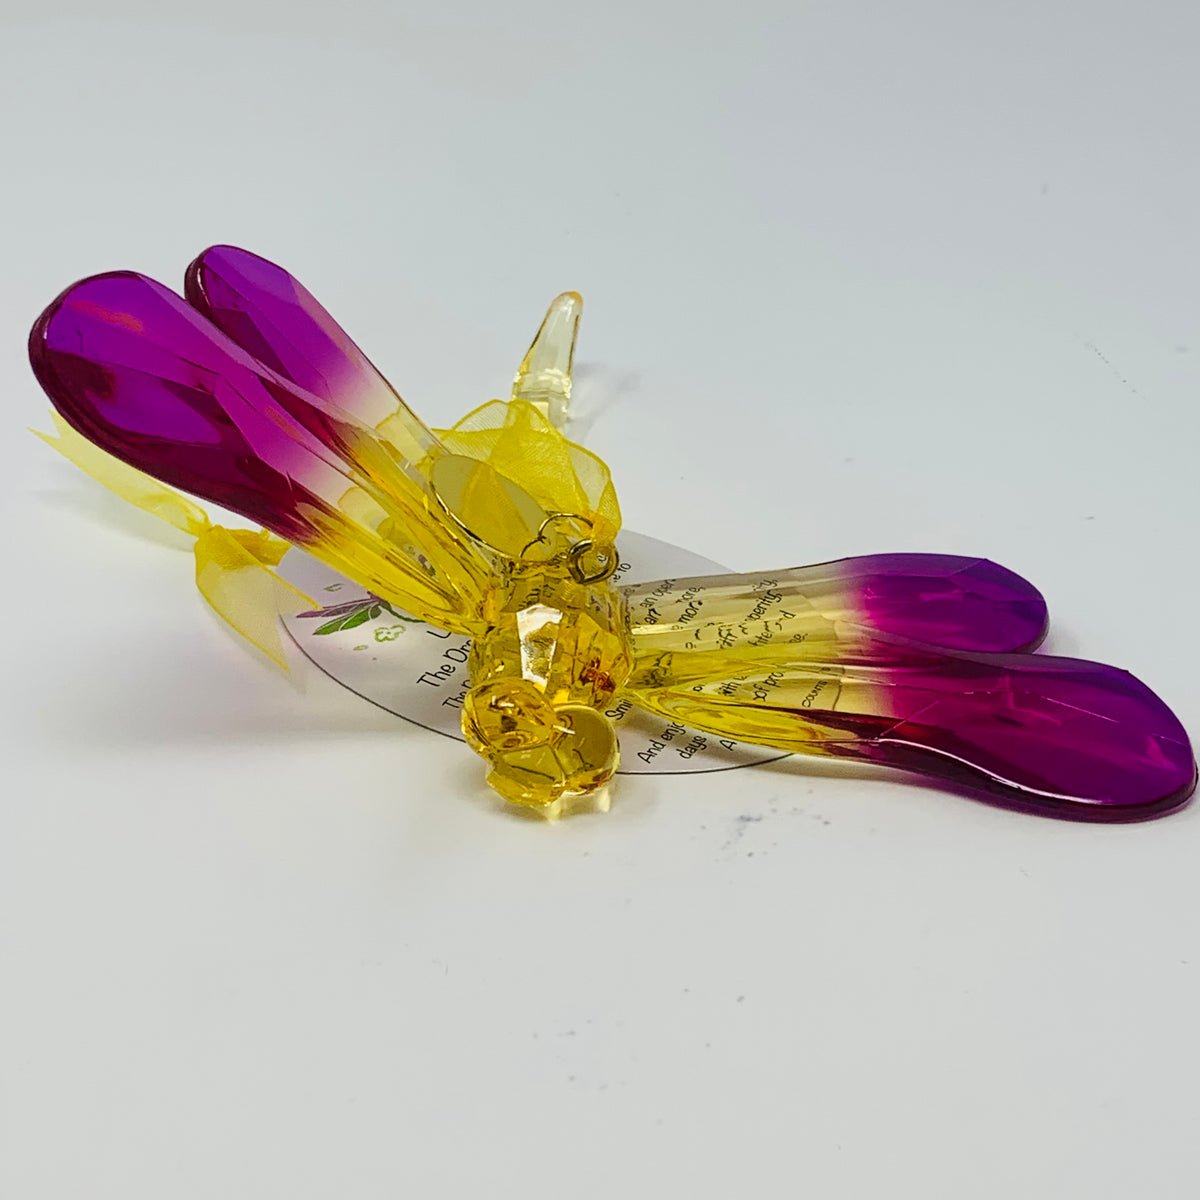 Acrylic Dragonfly Ornament